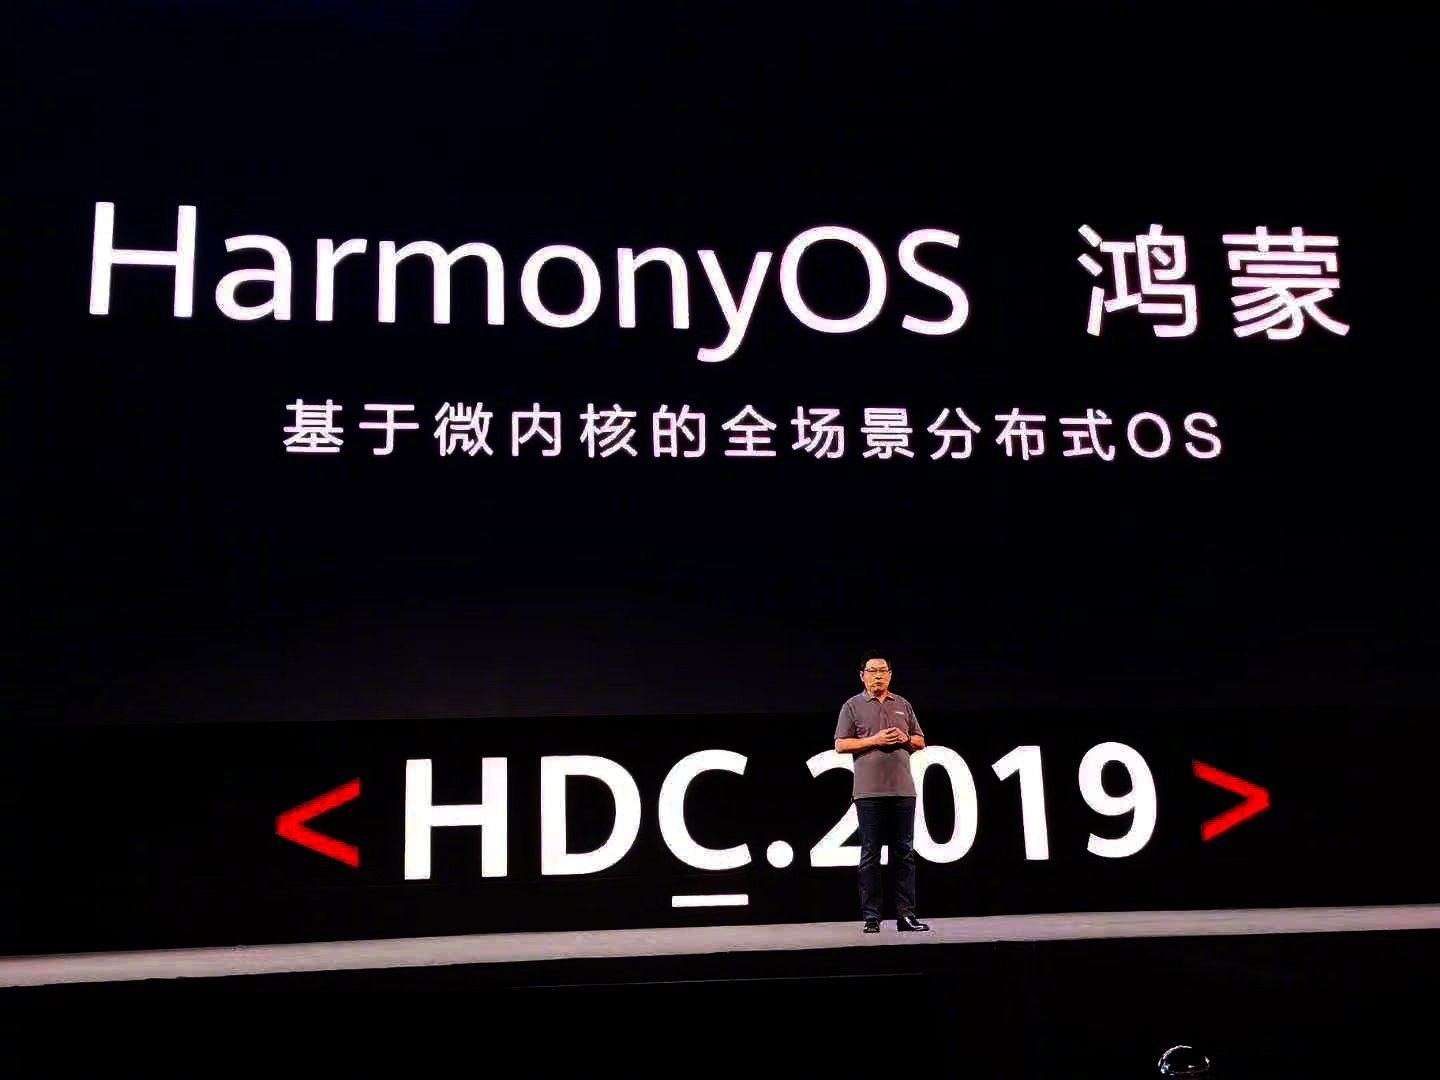 harmony-os-hdc-2019.jpg